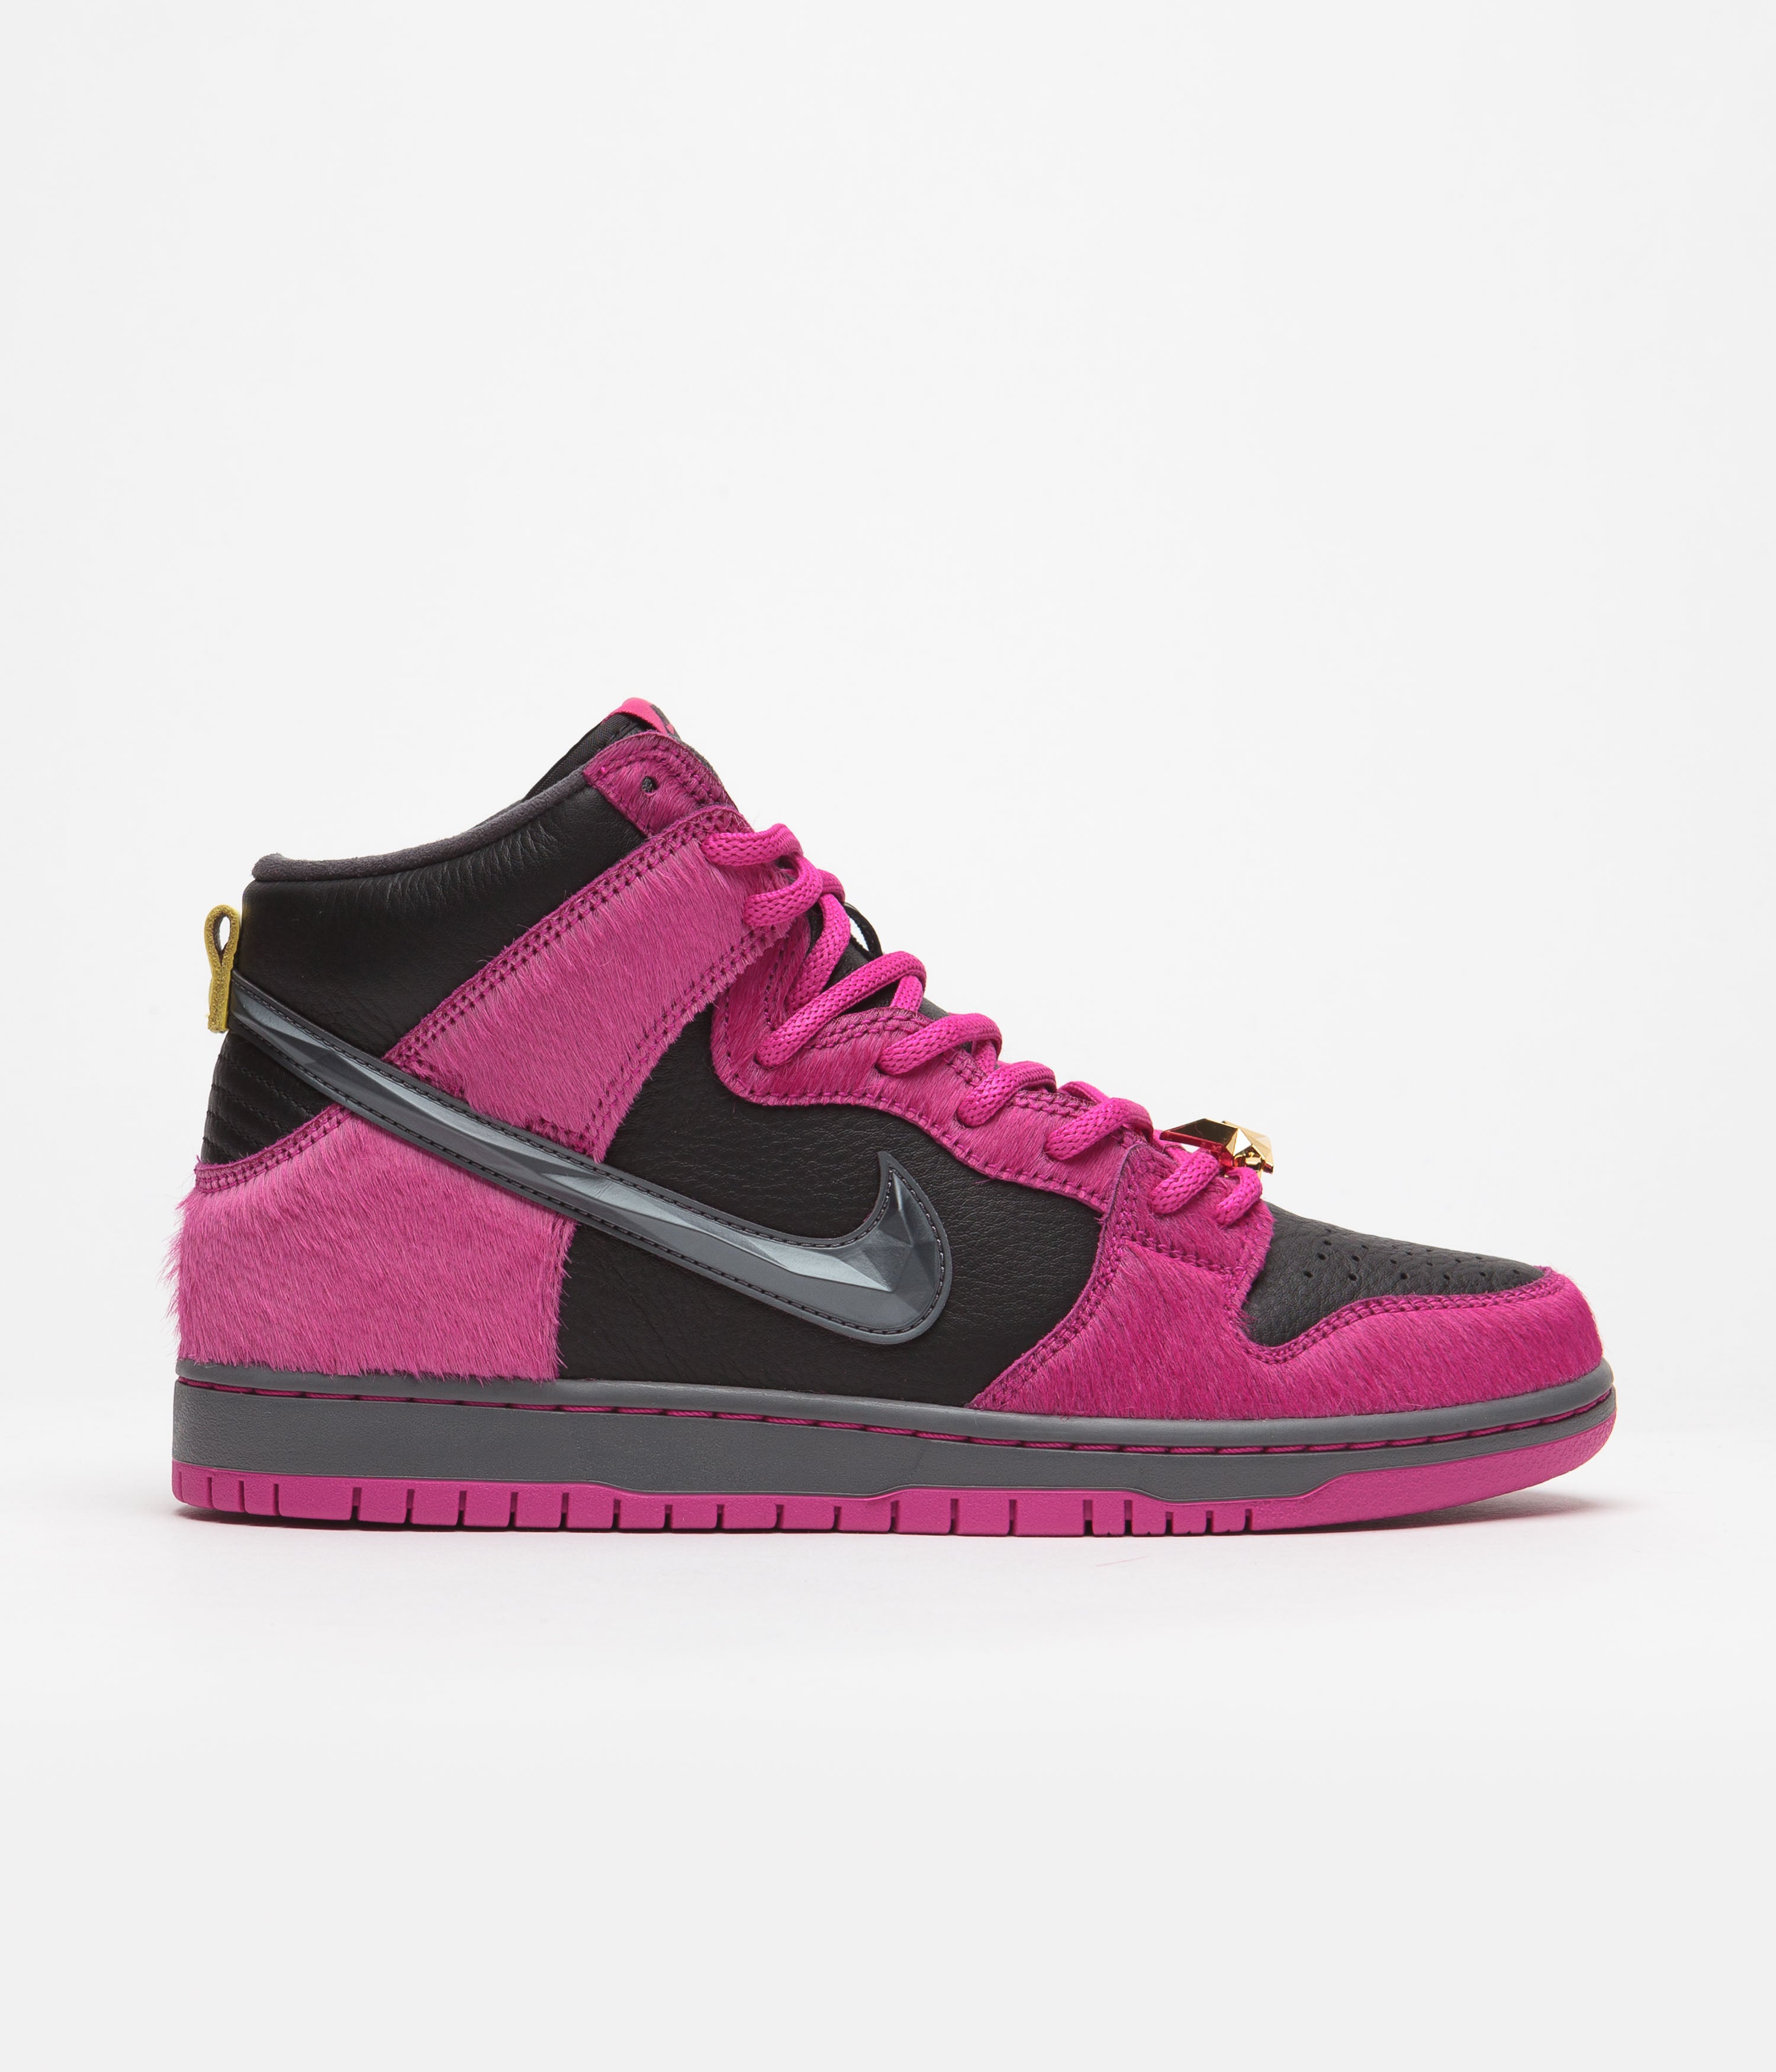 Nike SB x Run The Jewels Dunk High Shoes - Active Pink / Black